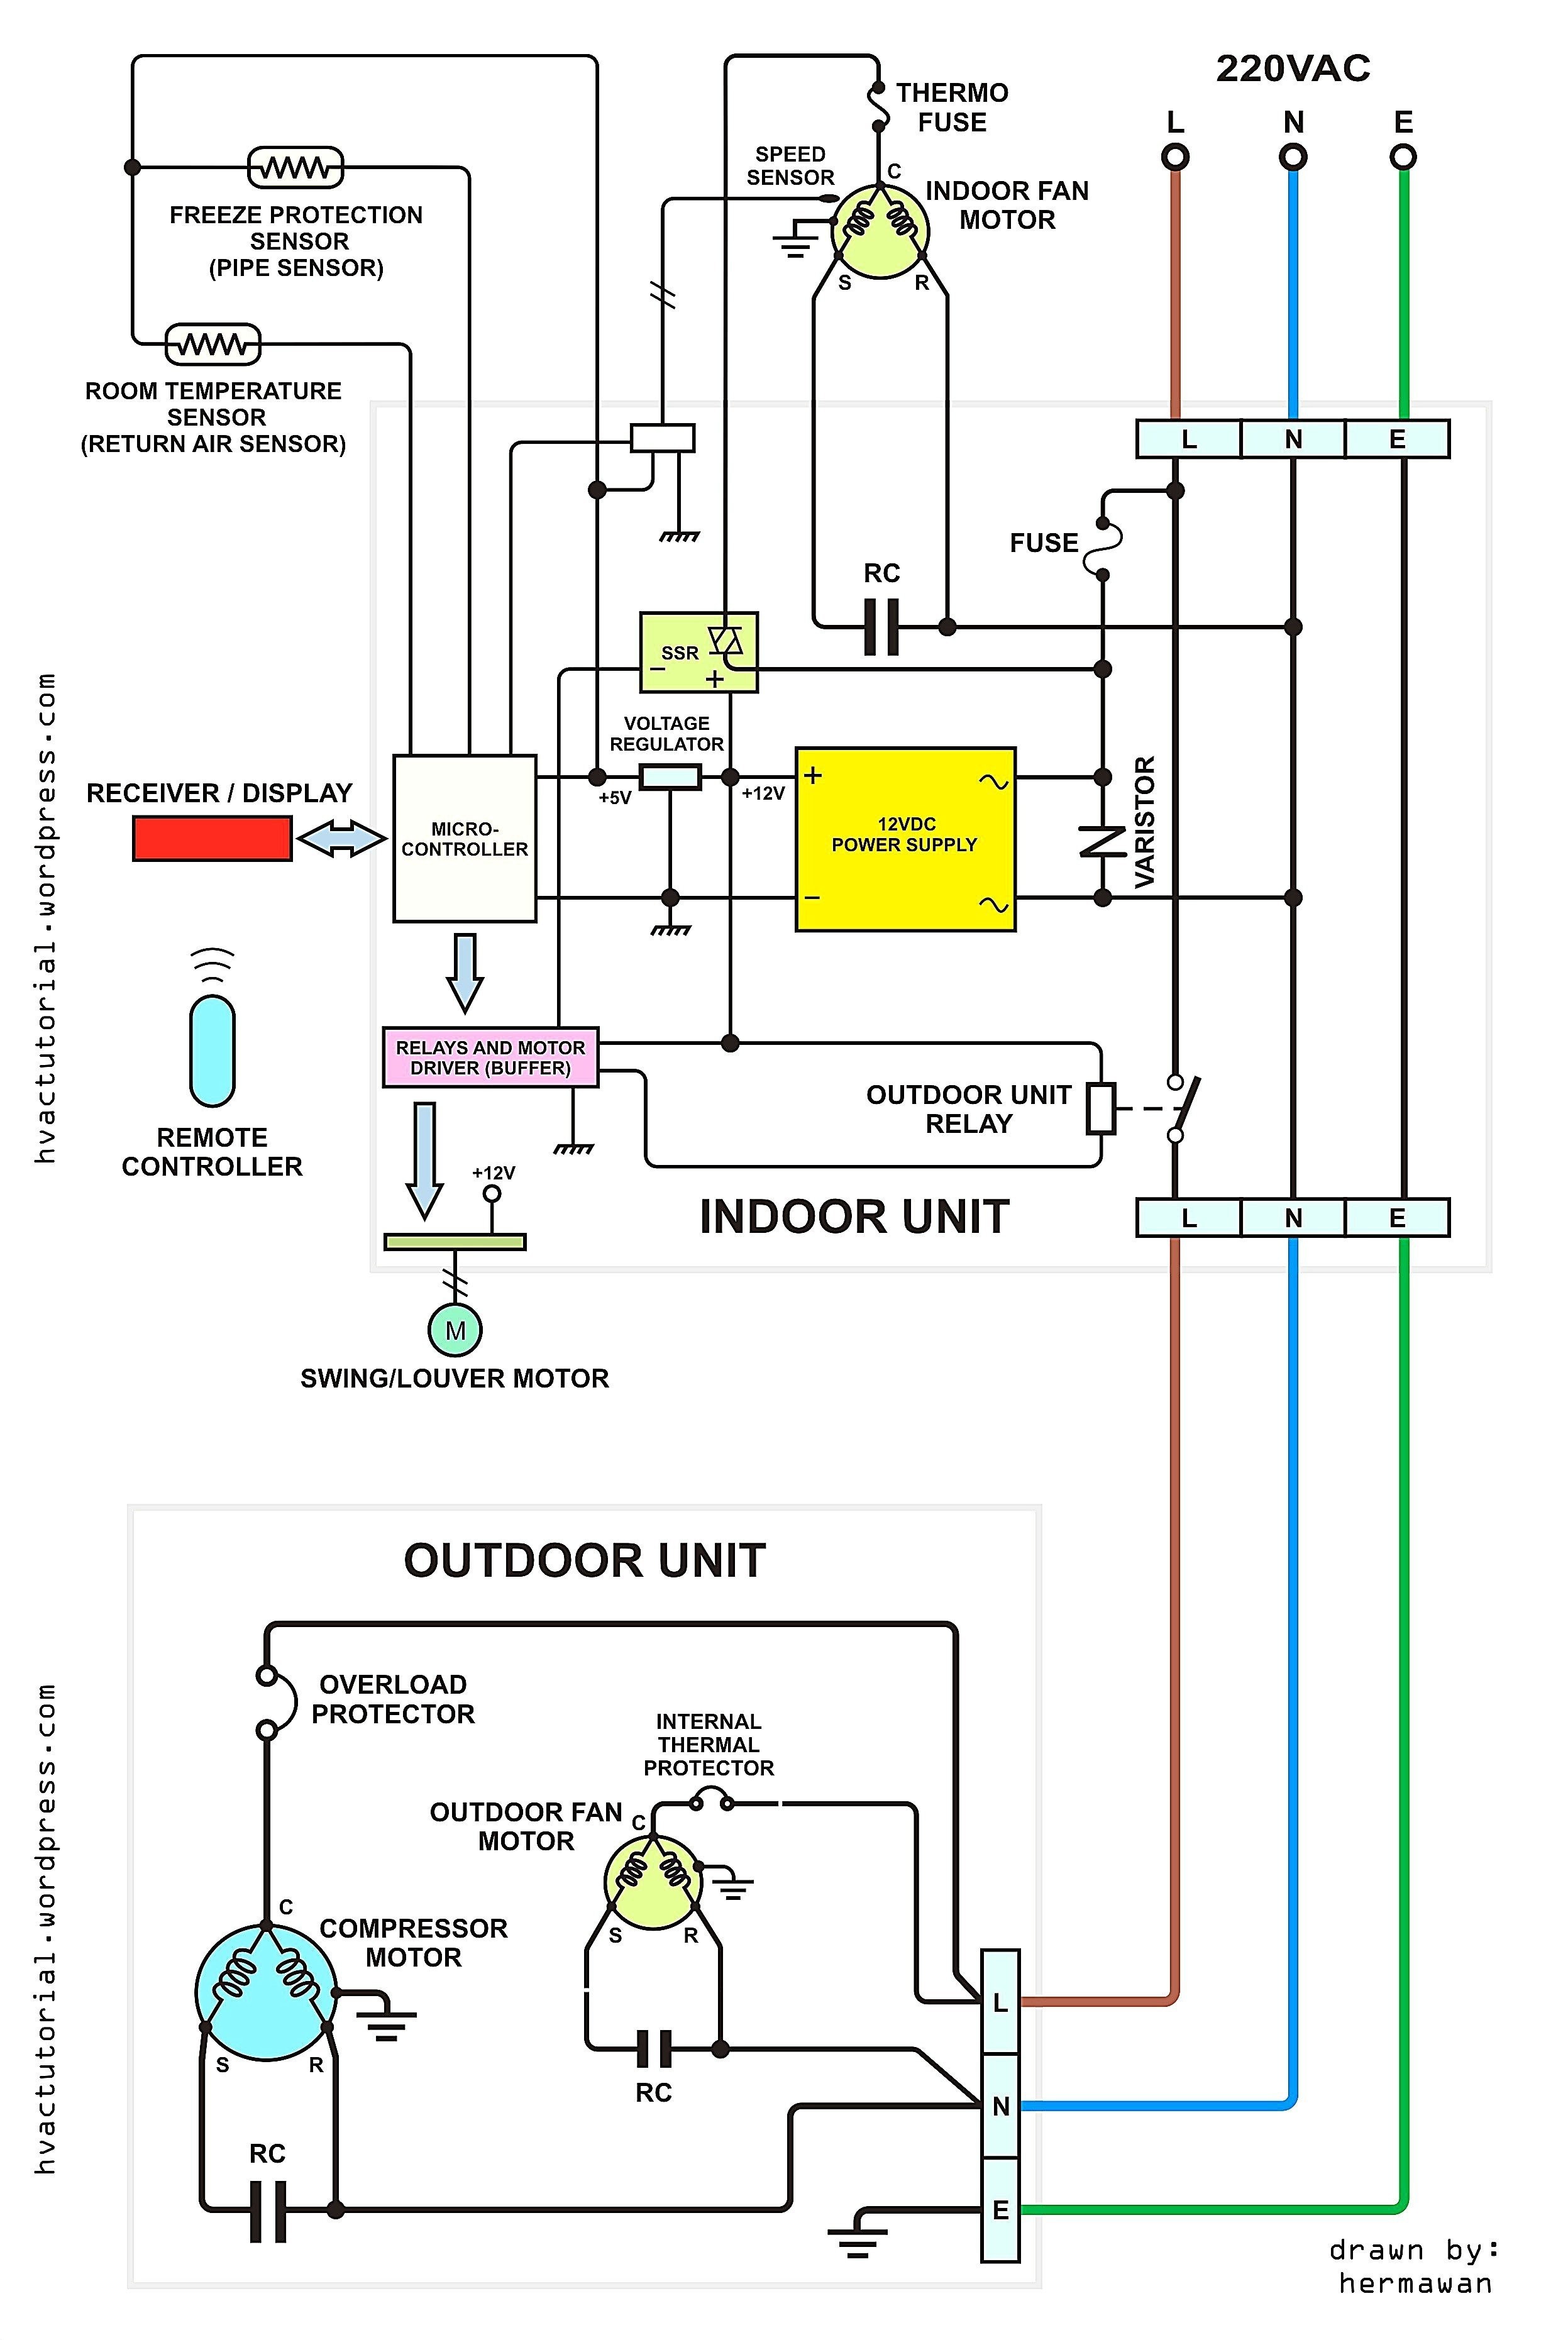 Elegant Heat Pump thermostat Wiring Diagram Diagram This particular graphic Trane Weathertron